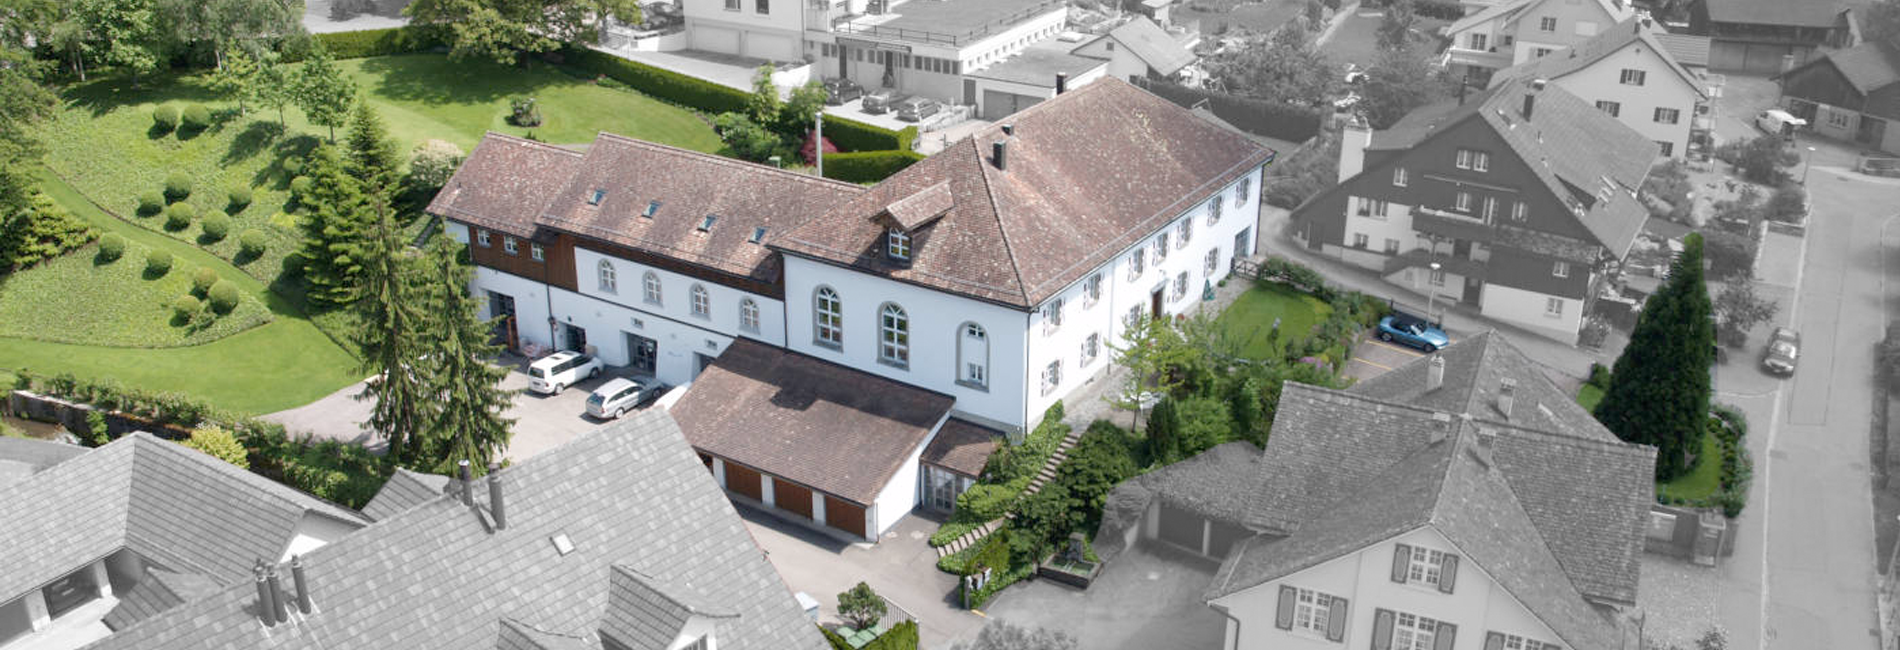 Schlossbraui Nürensdorf